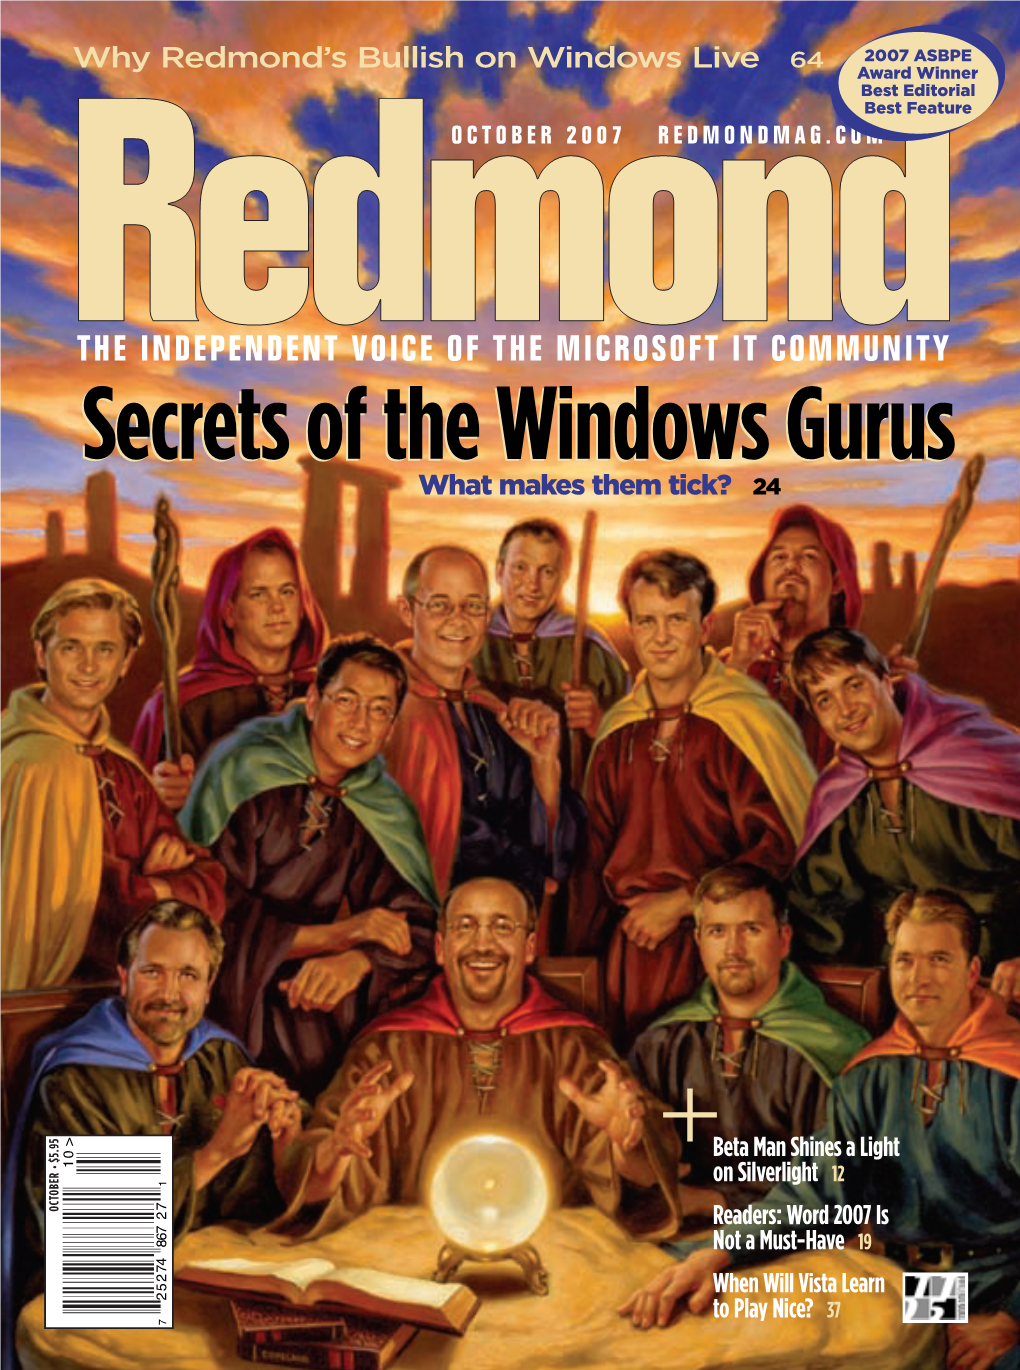 Secrets of the Windows Gurus